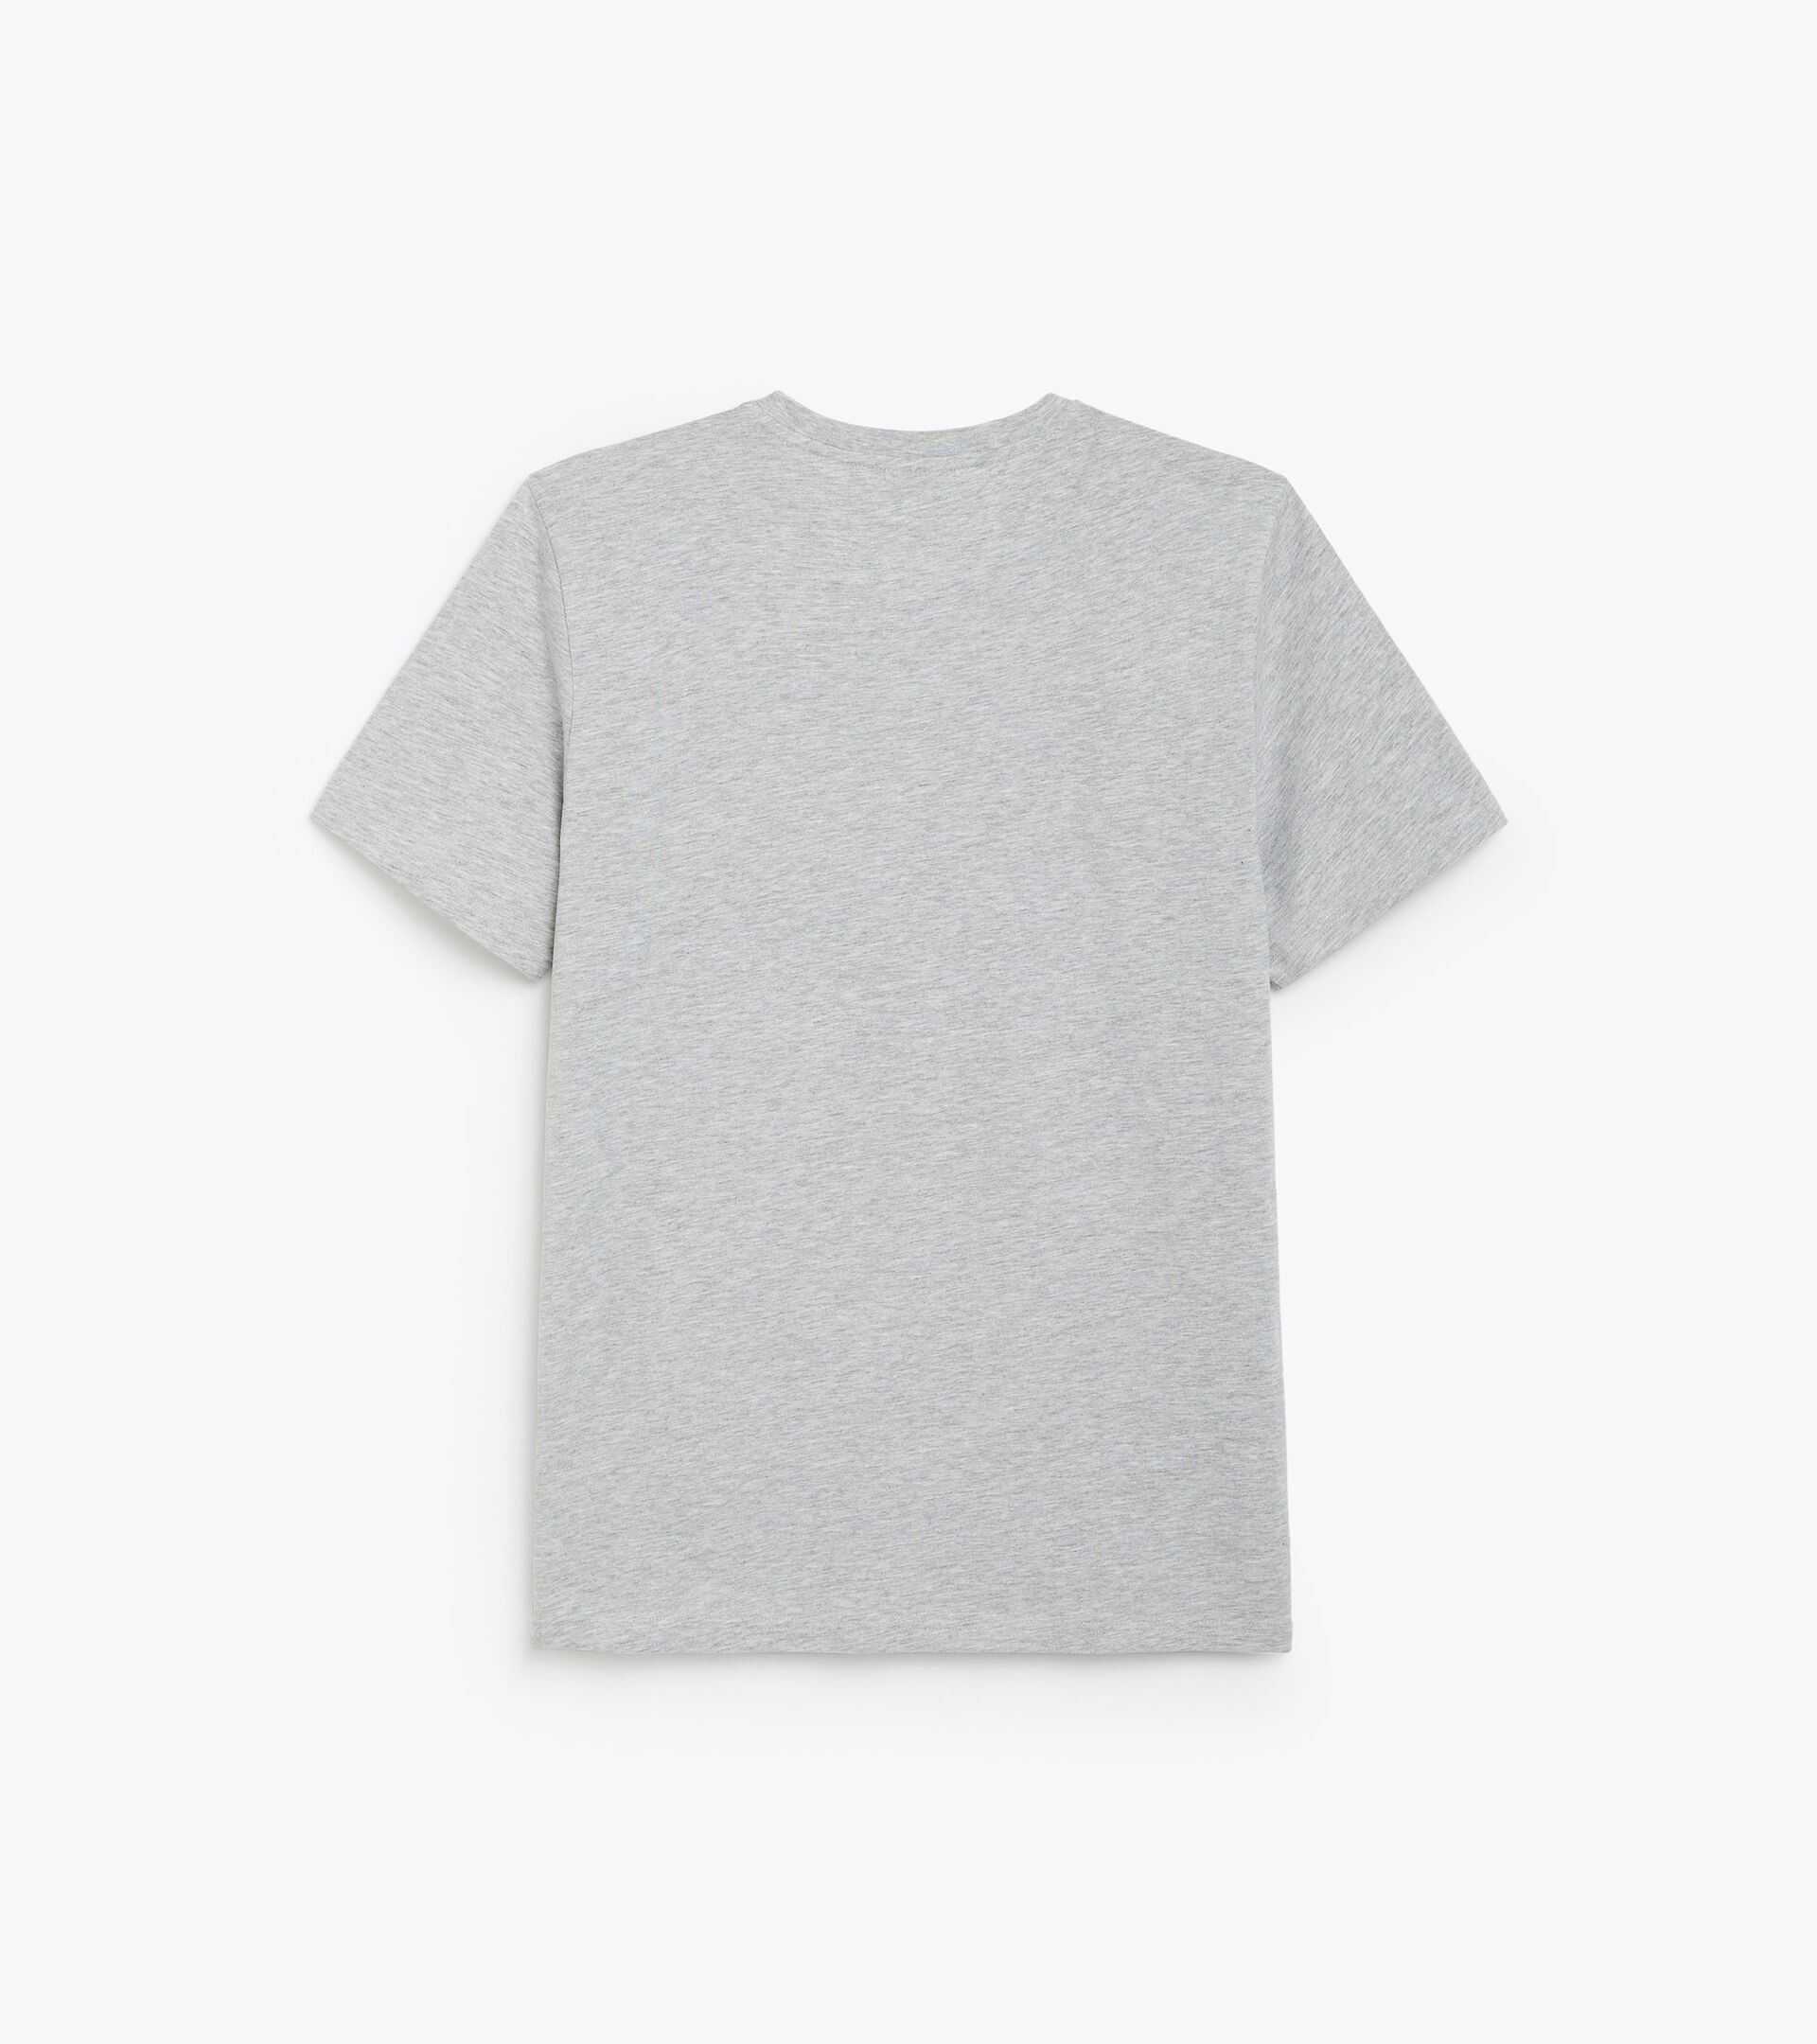 Cotton t-shirt - Men T-SHIRT SS ARCHIVE LIGHT MIDDLE GRAY MELANGE - Diadora